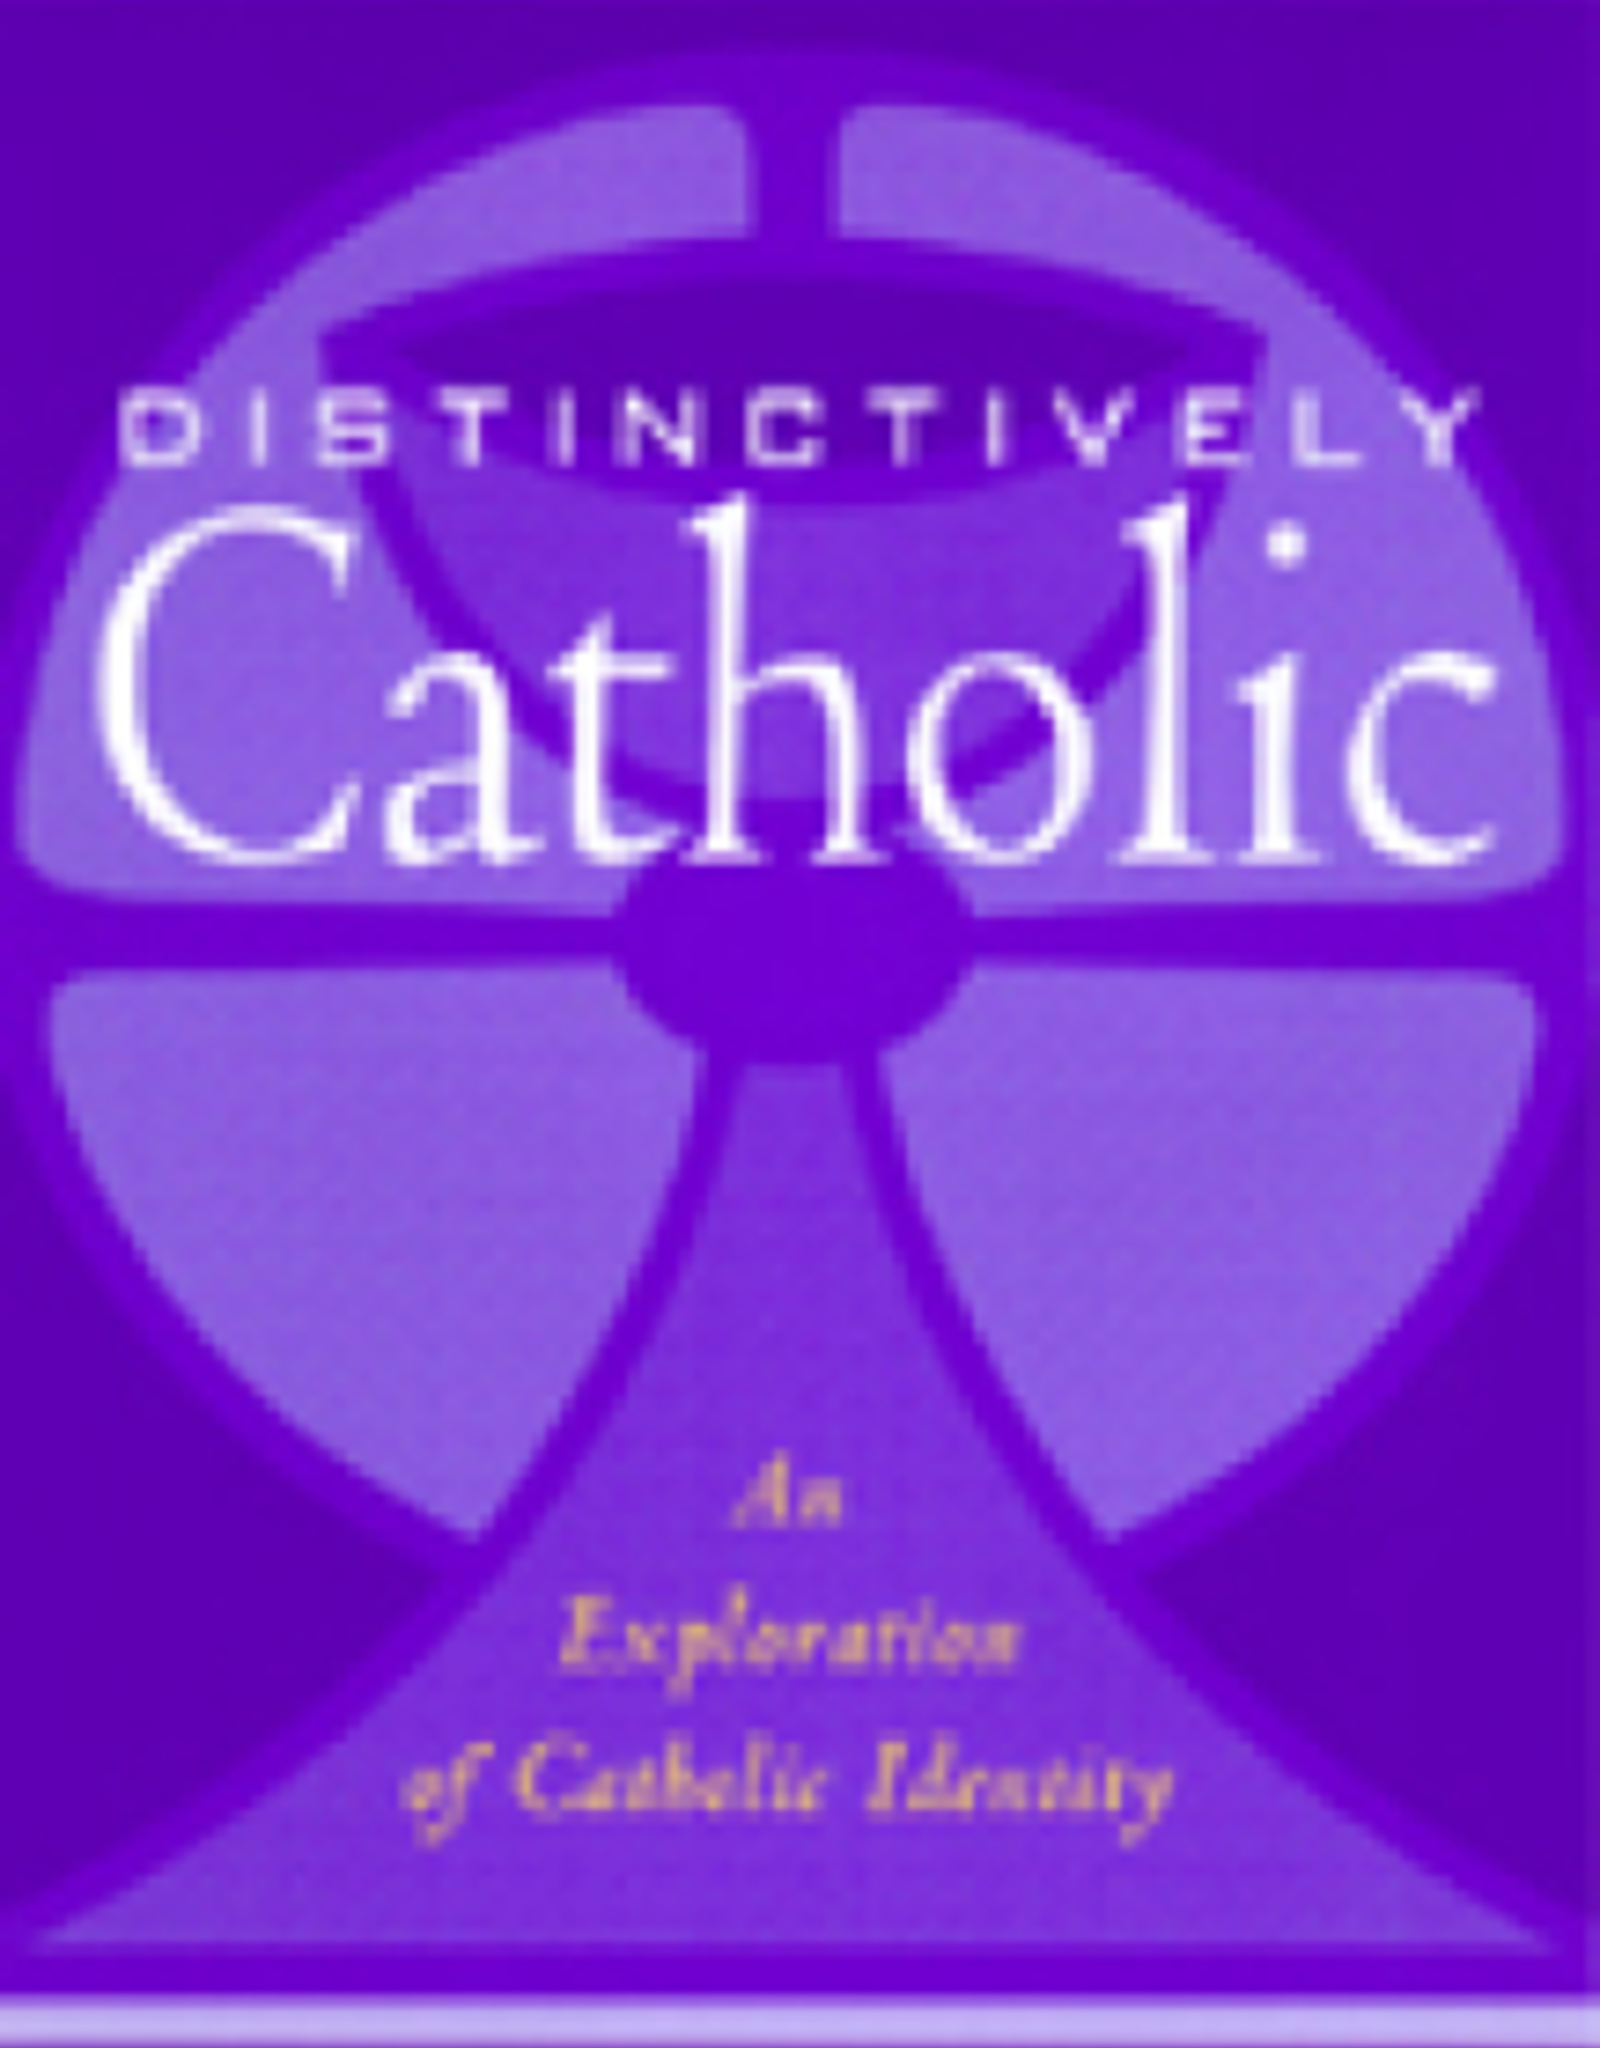 Paulist Press Distinctively Catholic: An Exploration of Catholic Identity, by Daniel Donovan (paperback)